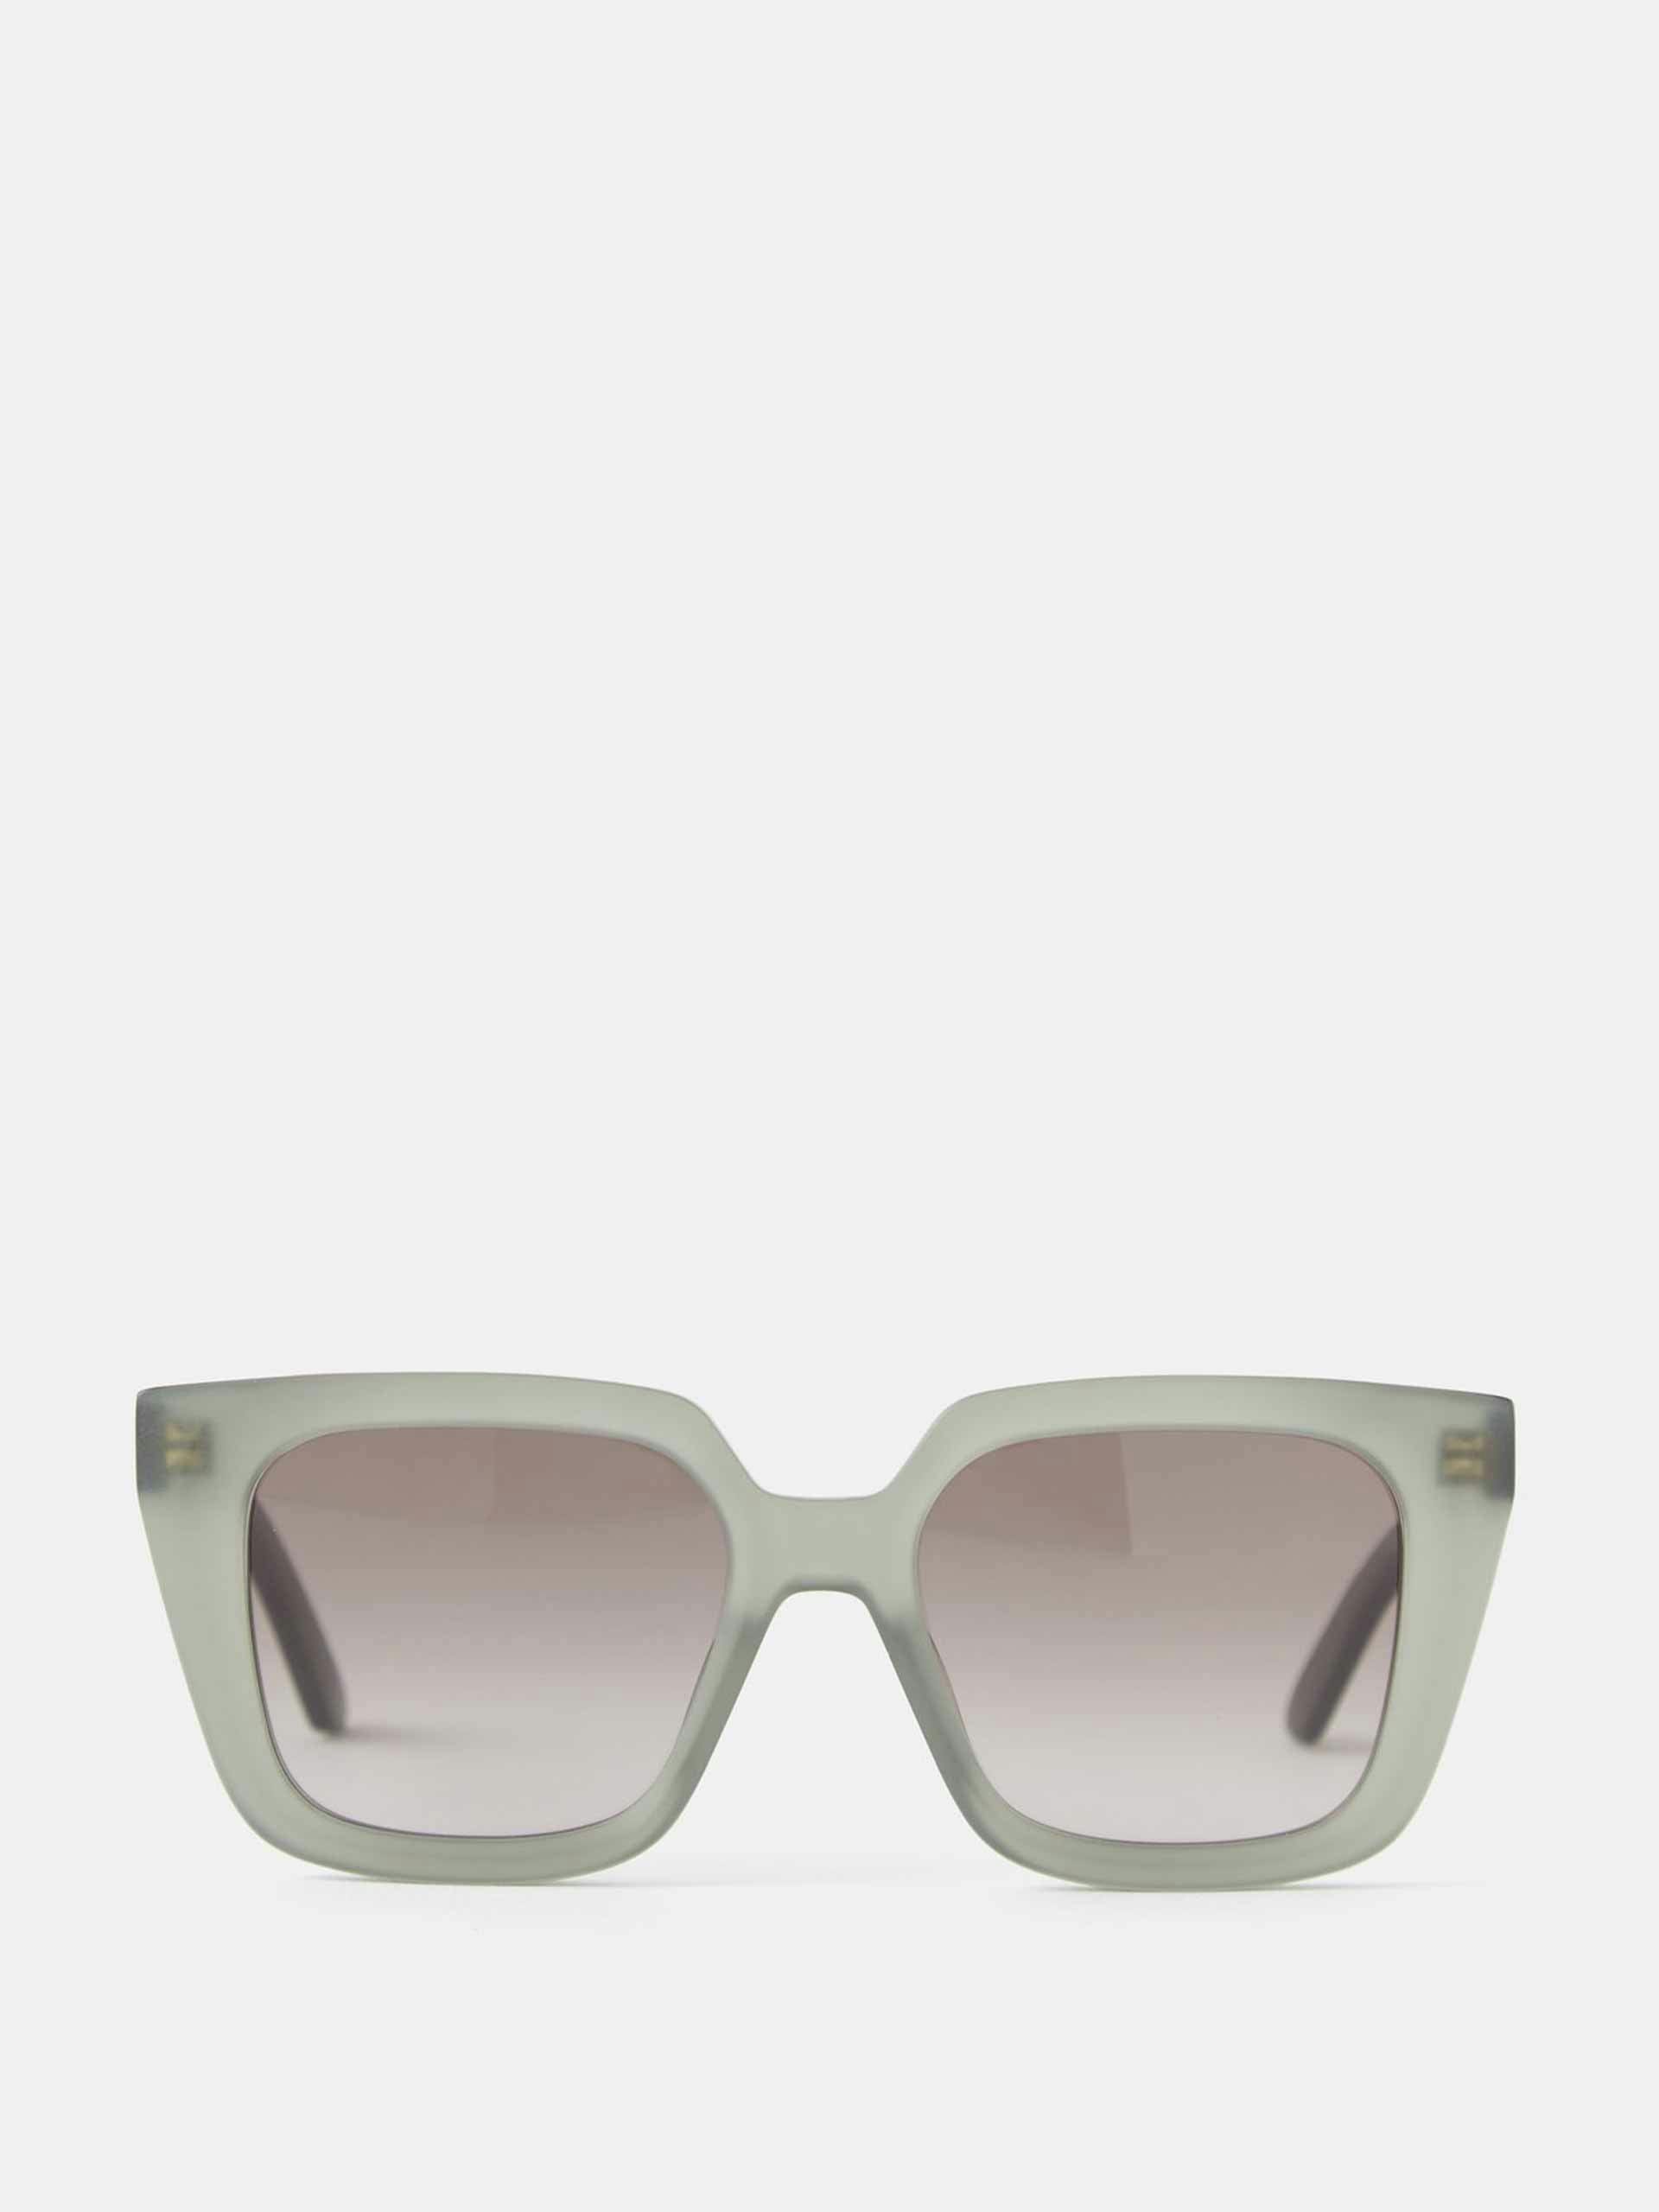 Green oversized square acetate sunglasses